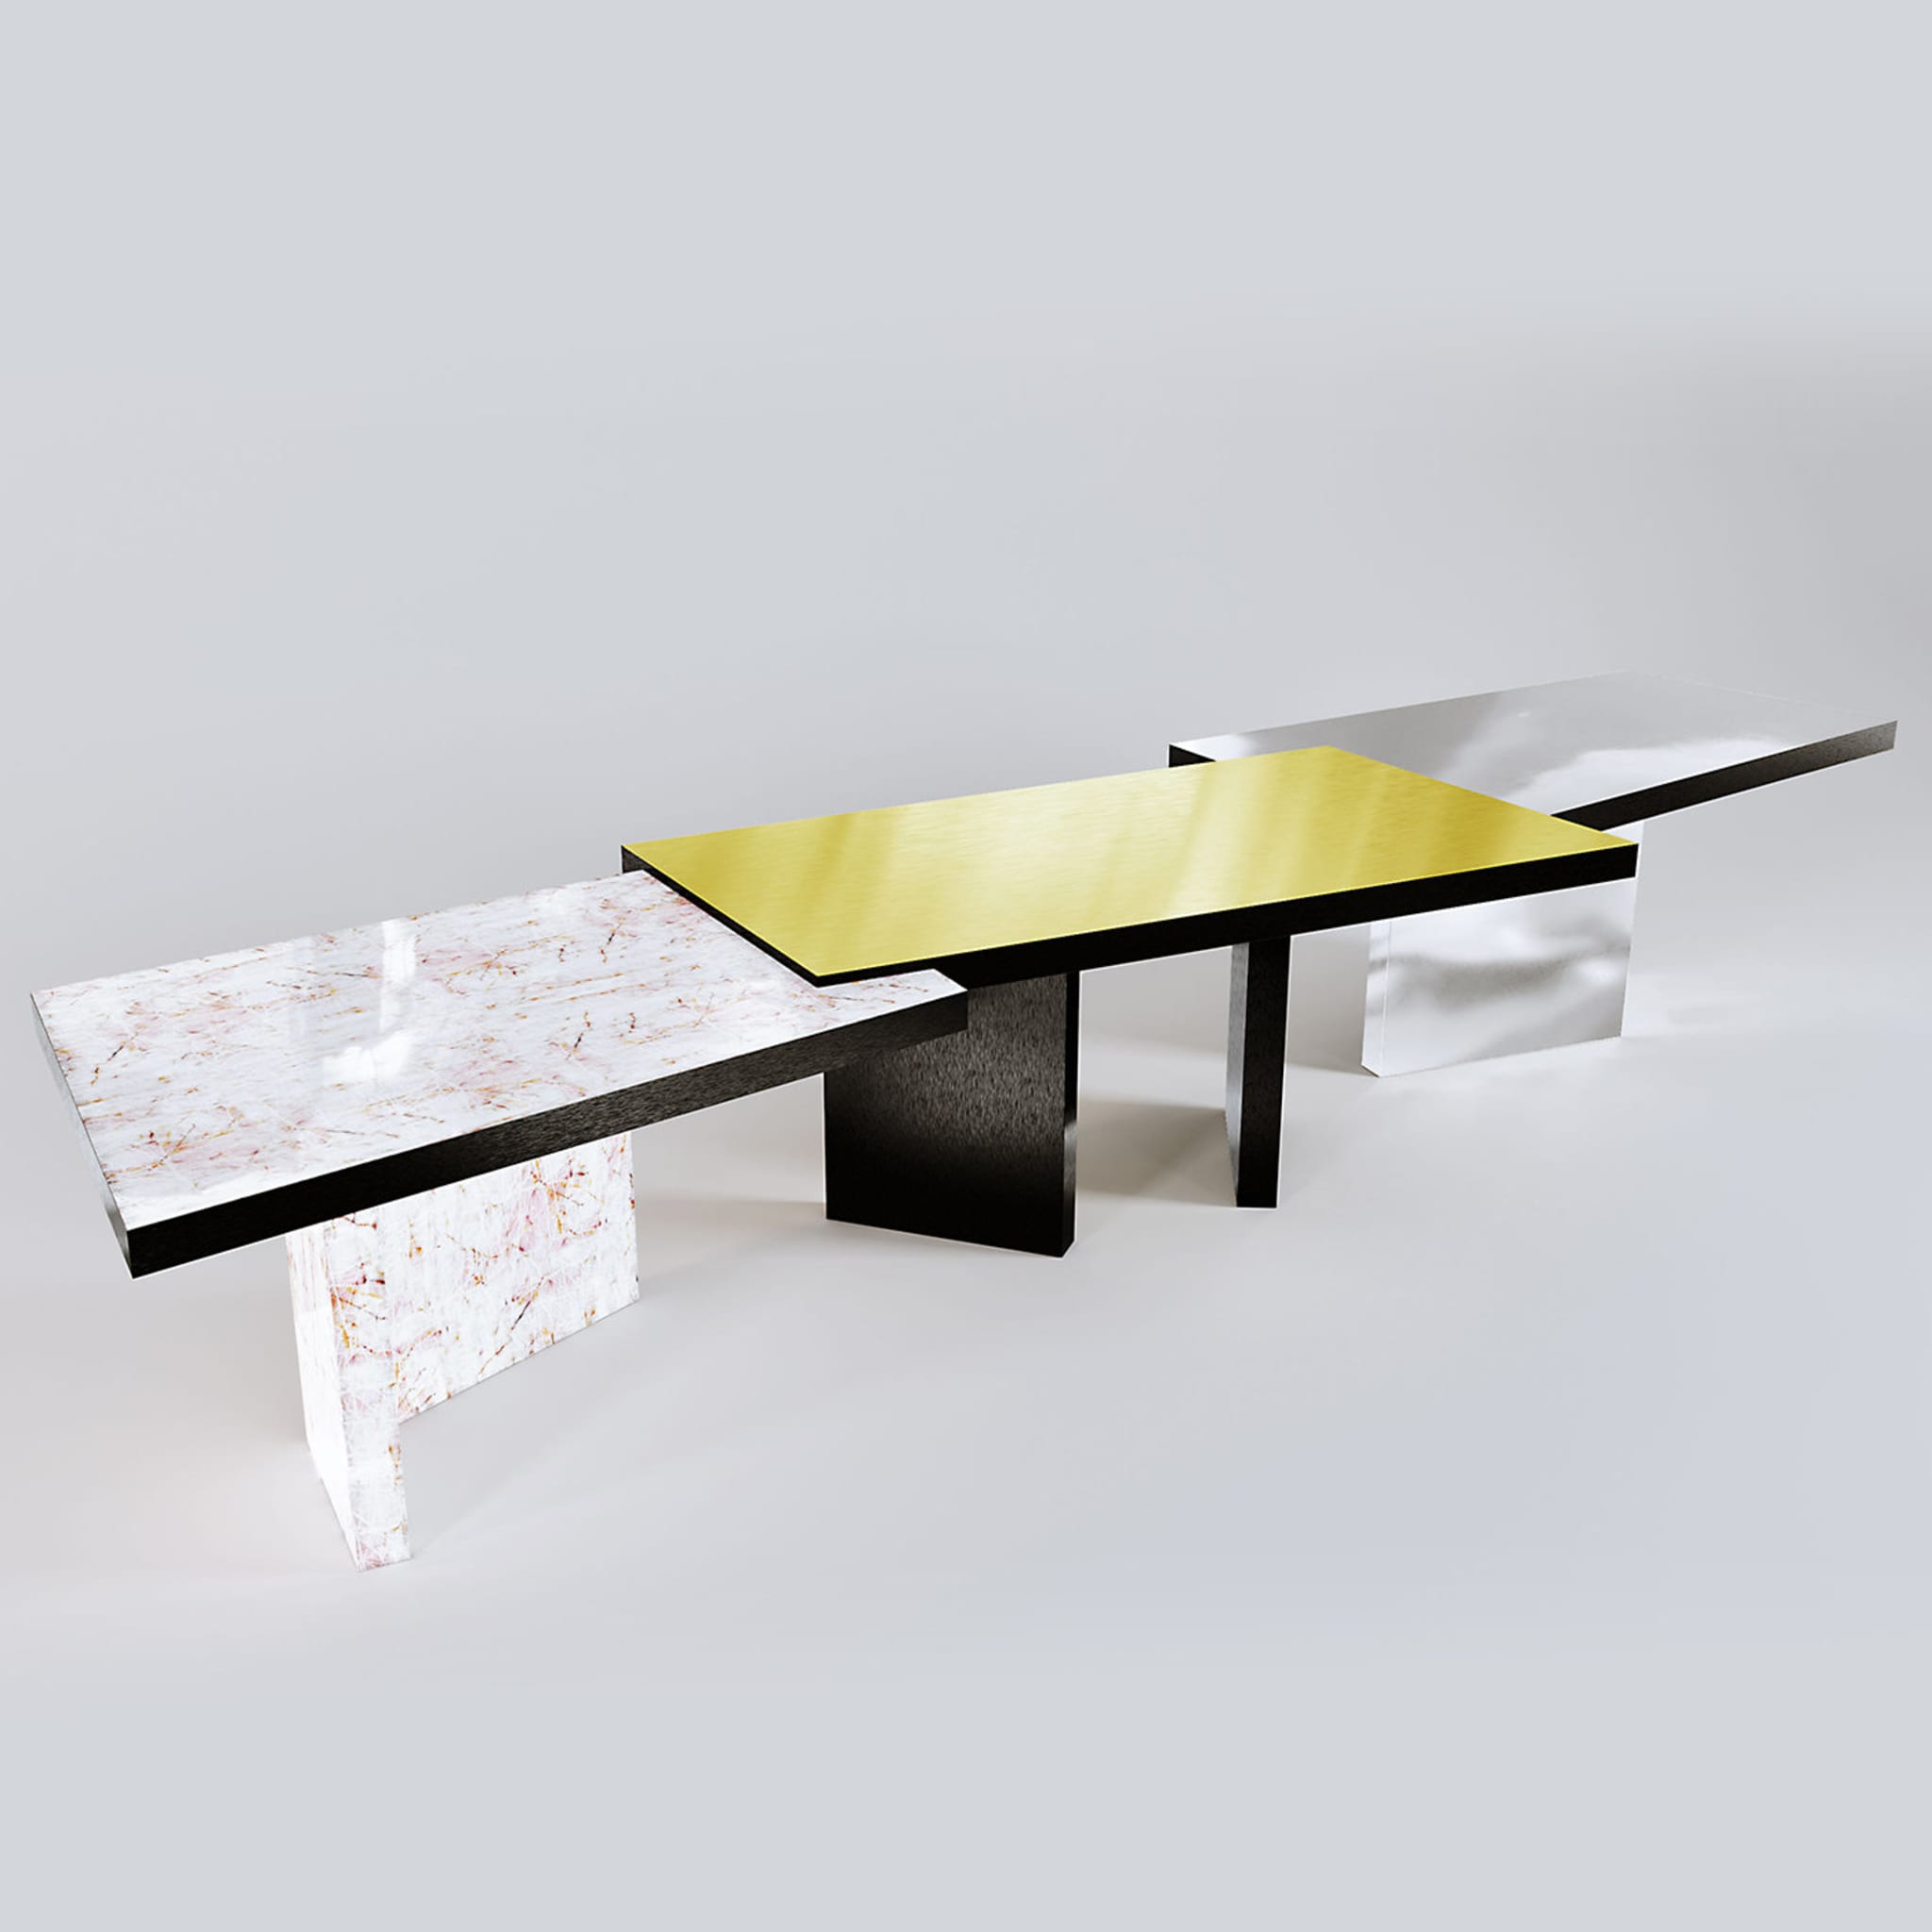 Riflessi Sculptural Table #3 by Gianna Farina - Alternative view 1